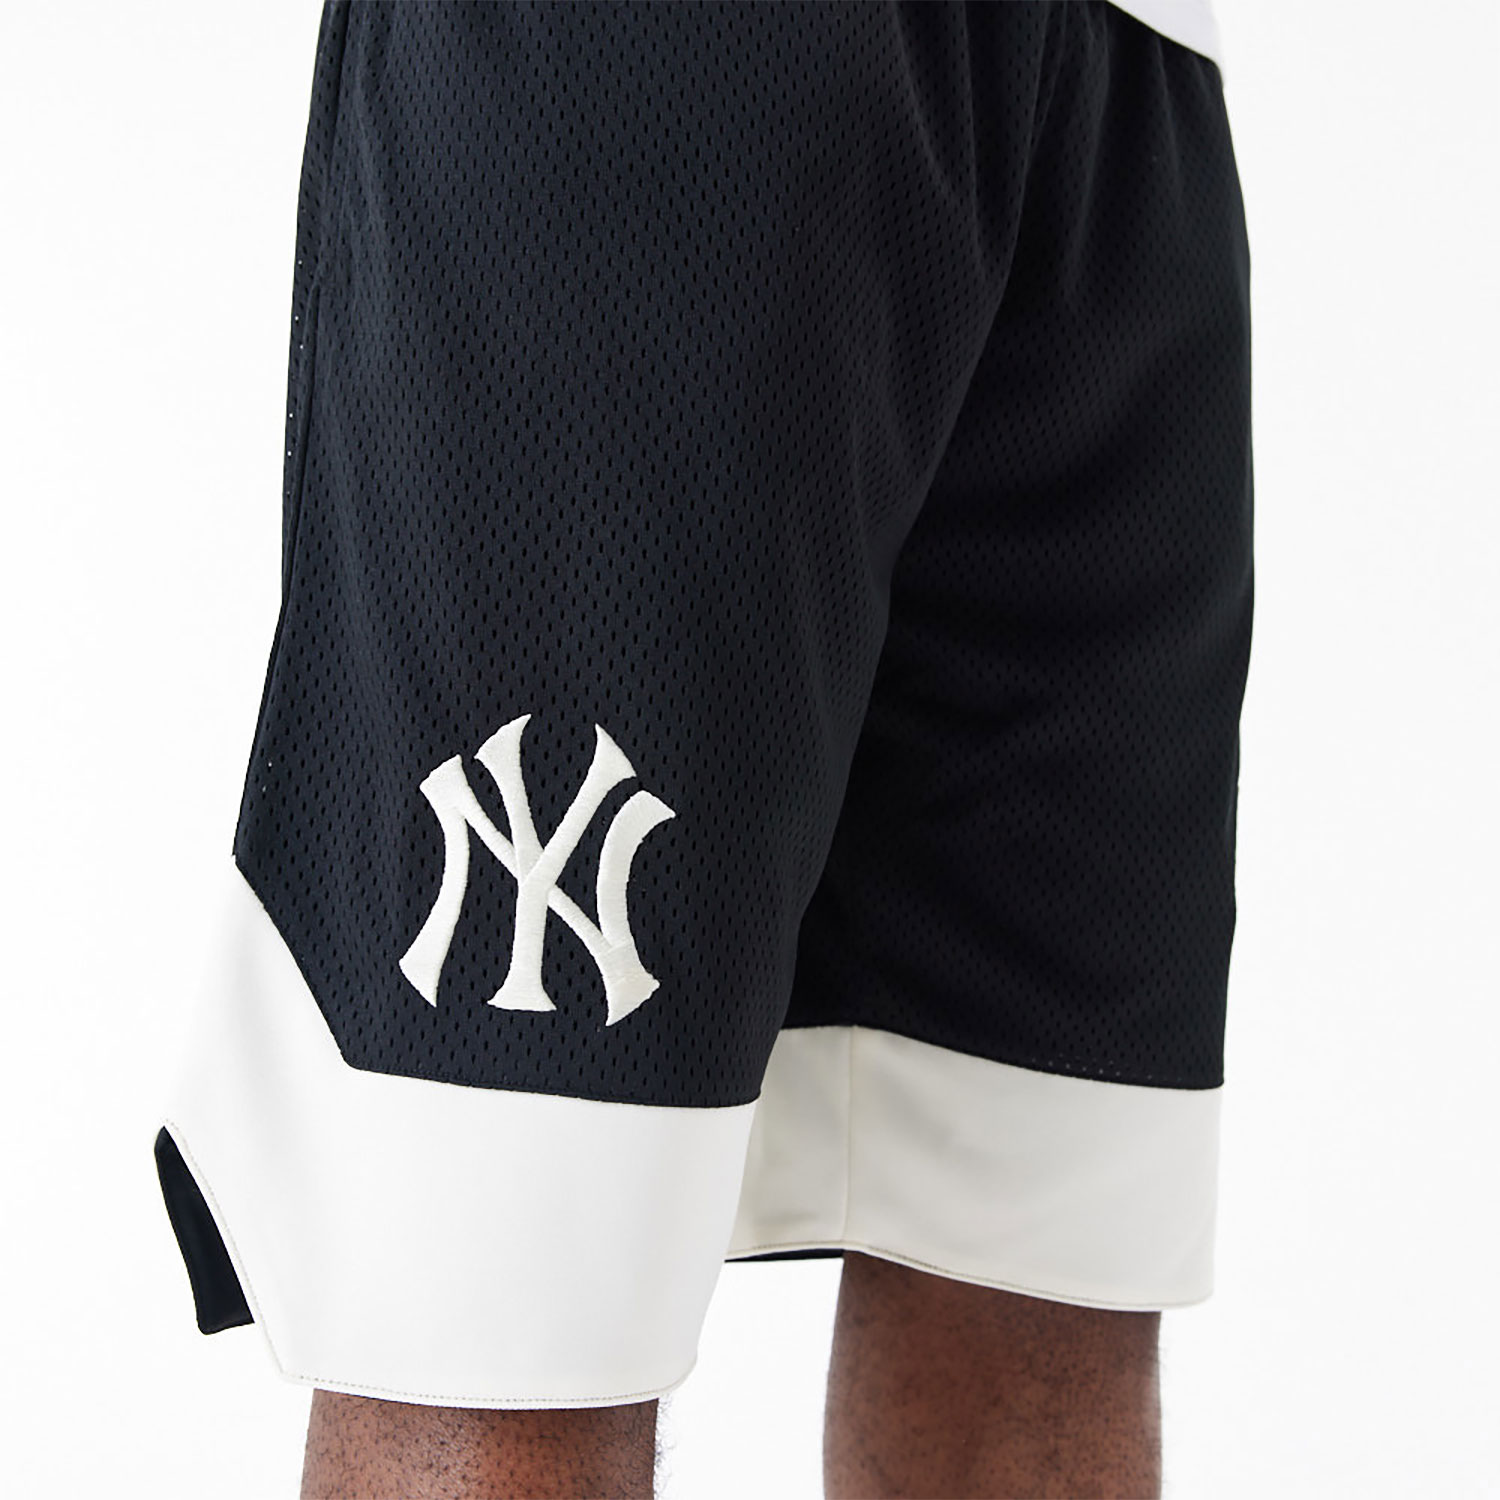 New York Yankees MLB World Series Black Mesh Shorts